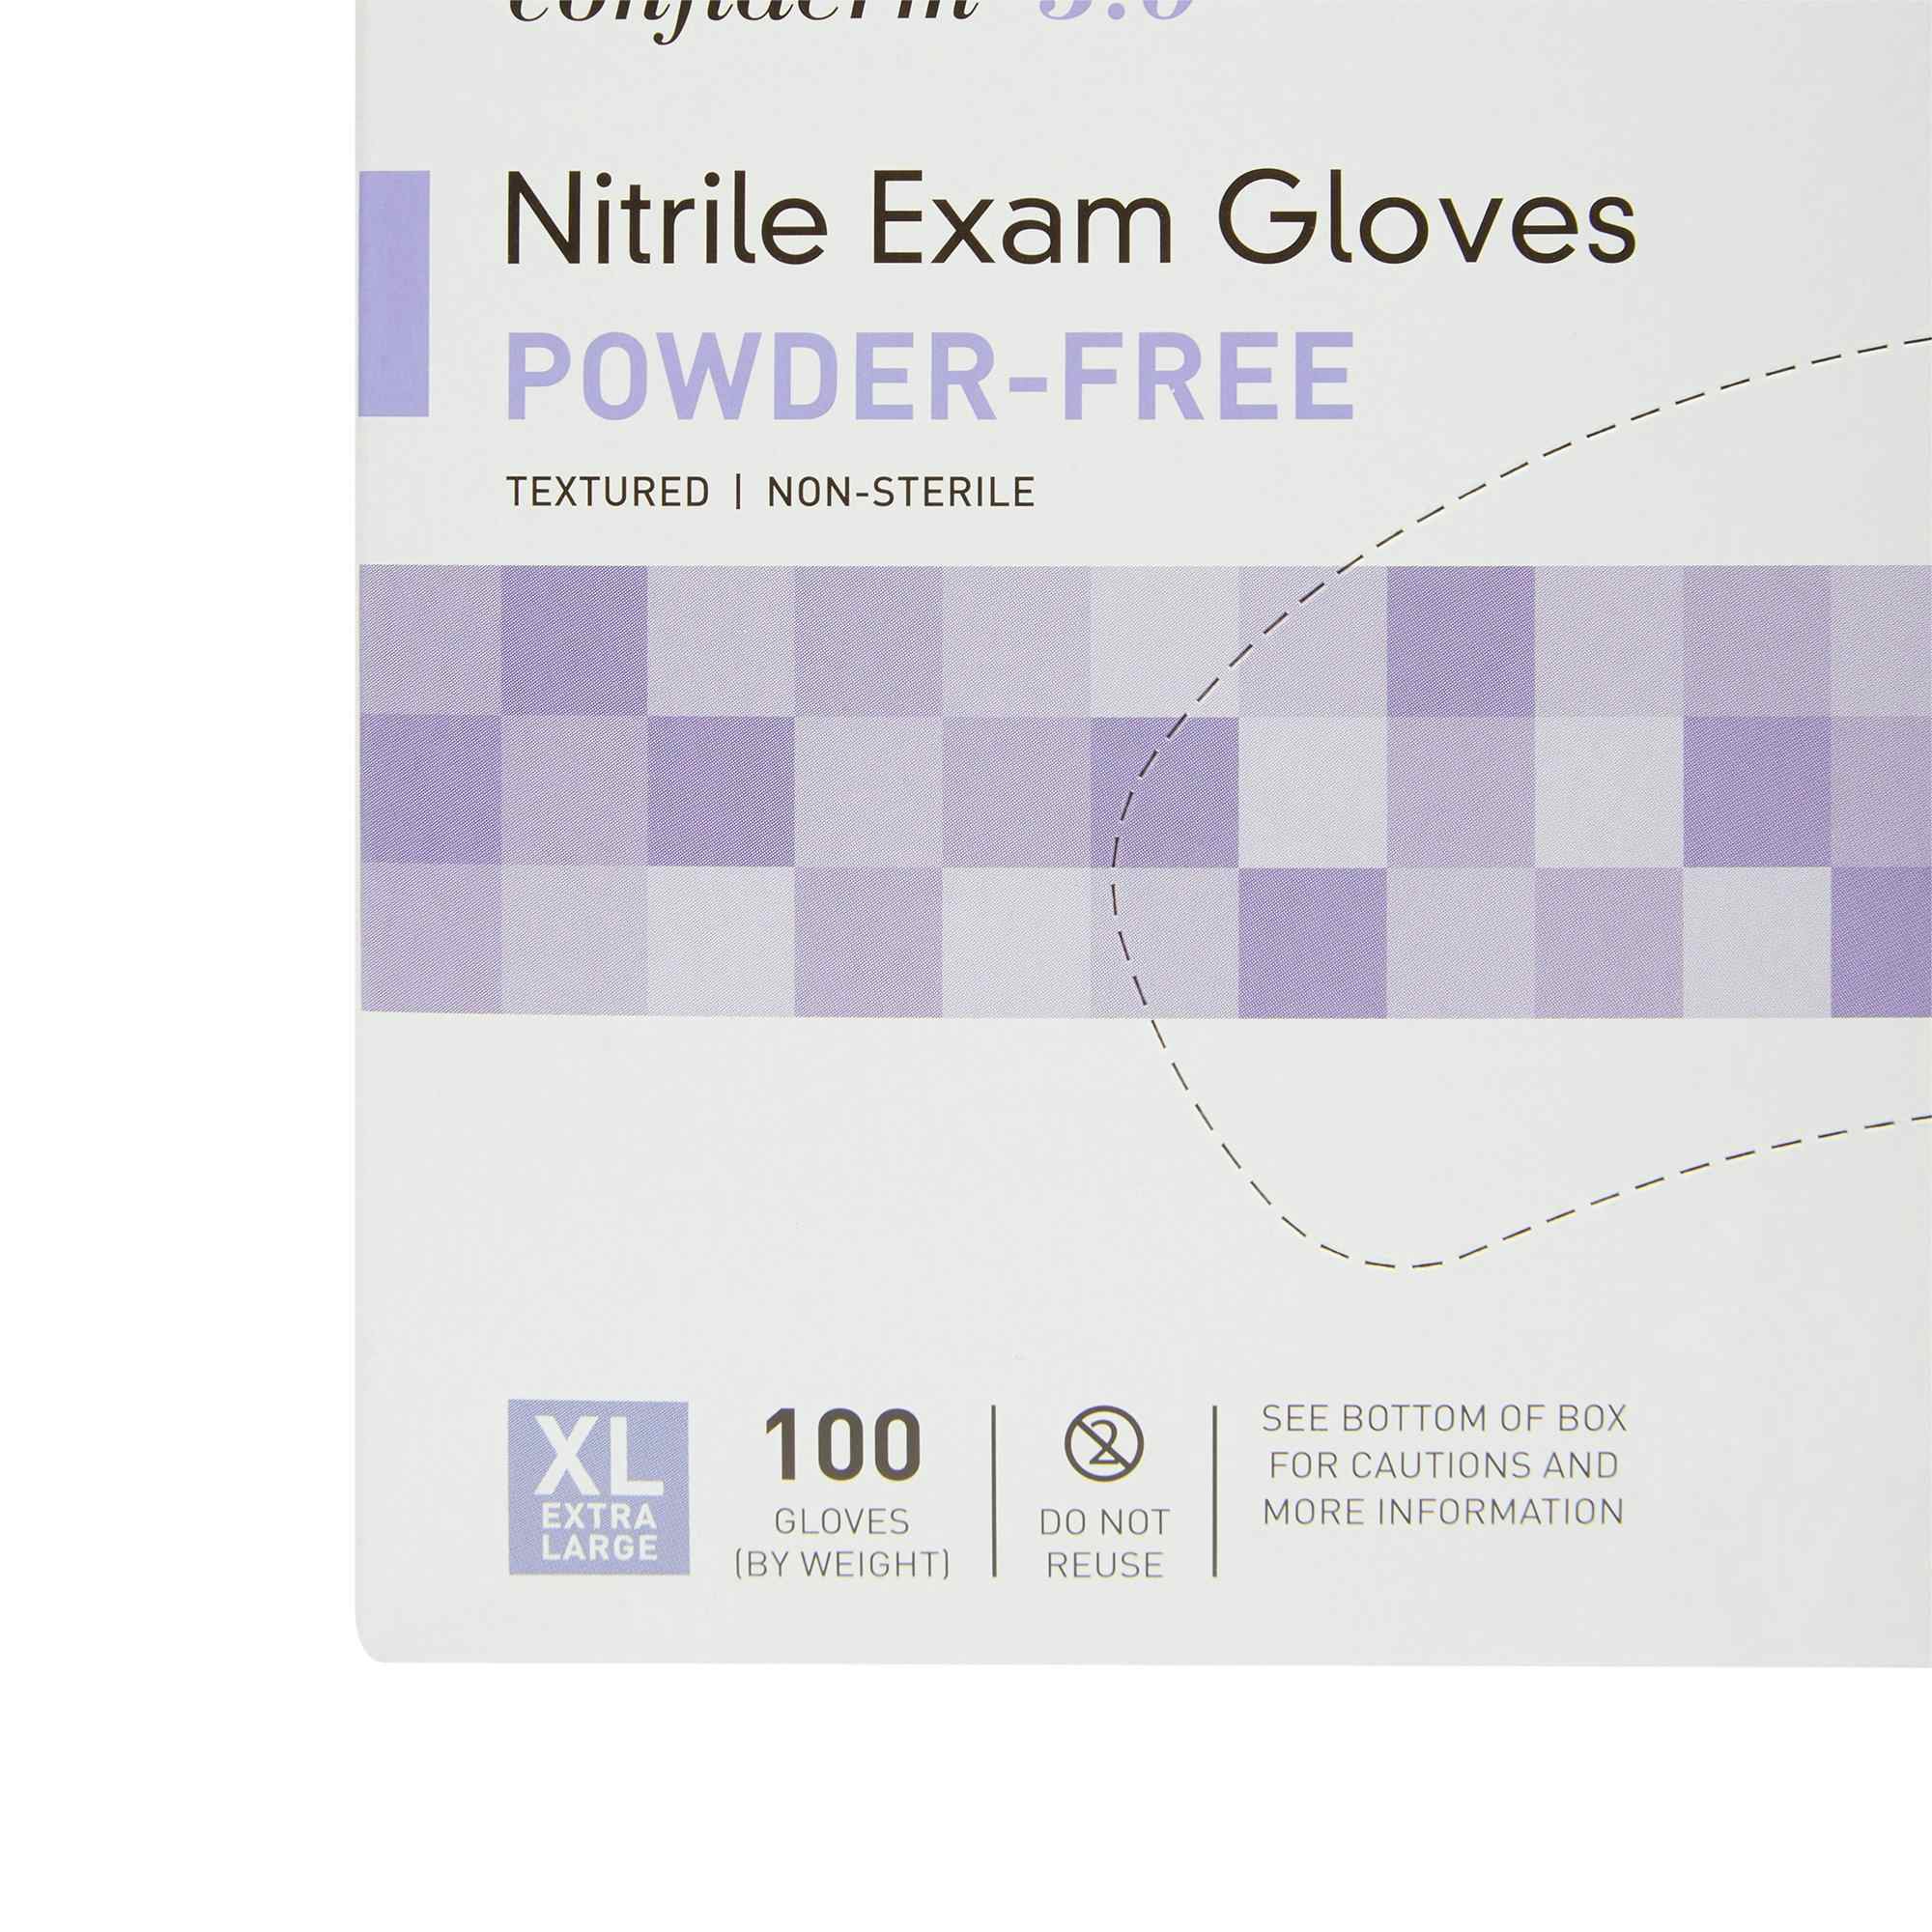 McKesson Confiderm 3.0 Nitrile Exam Gloves, Powder Free